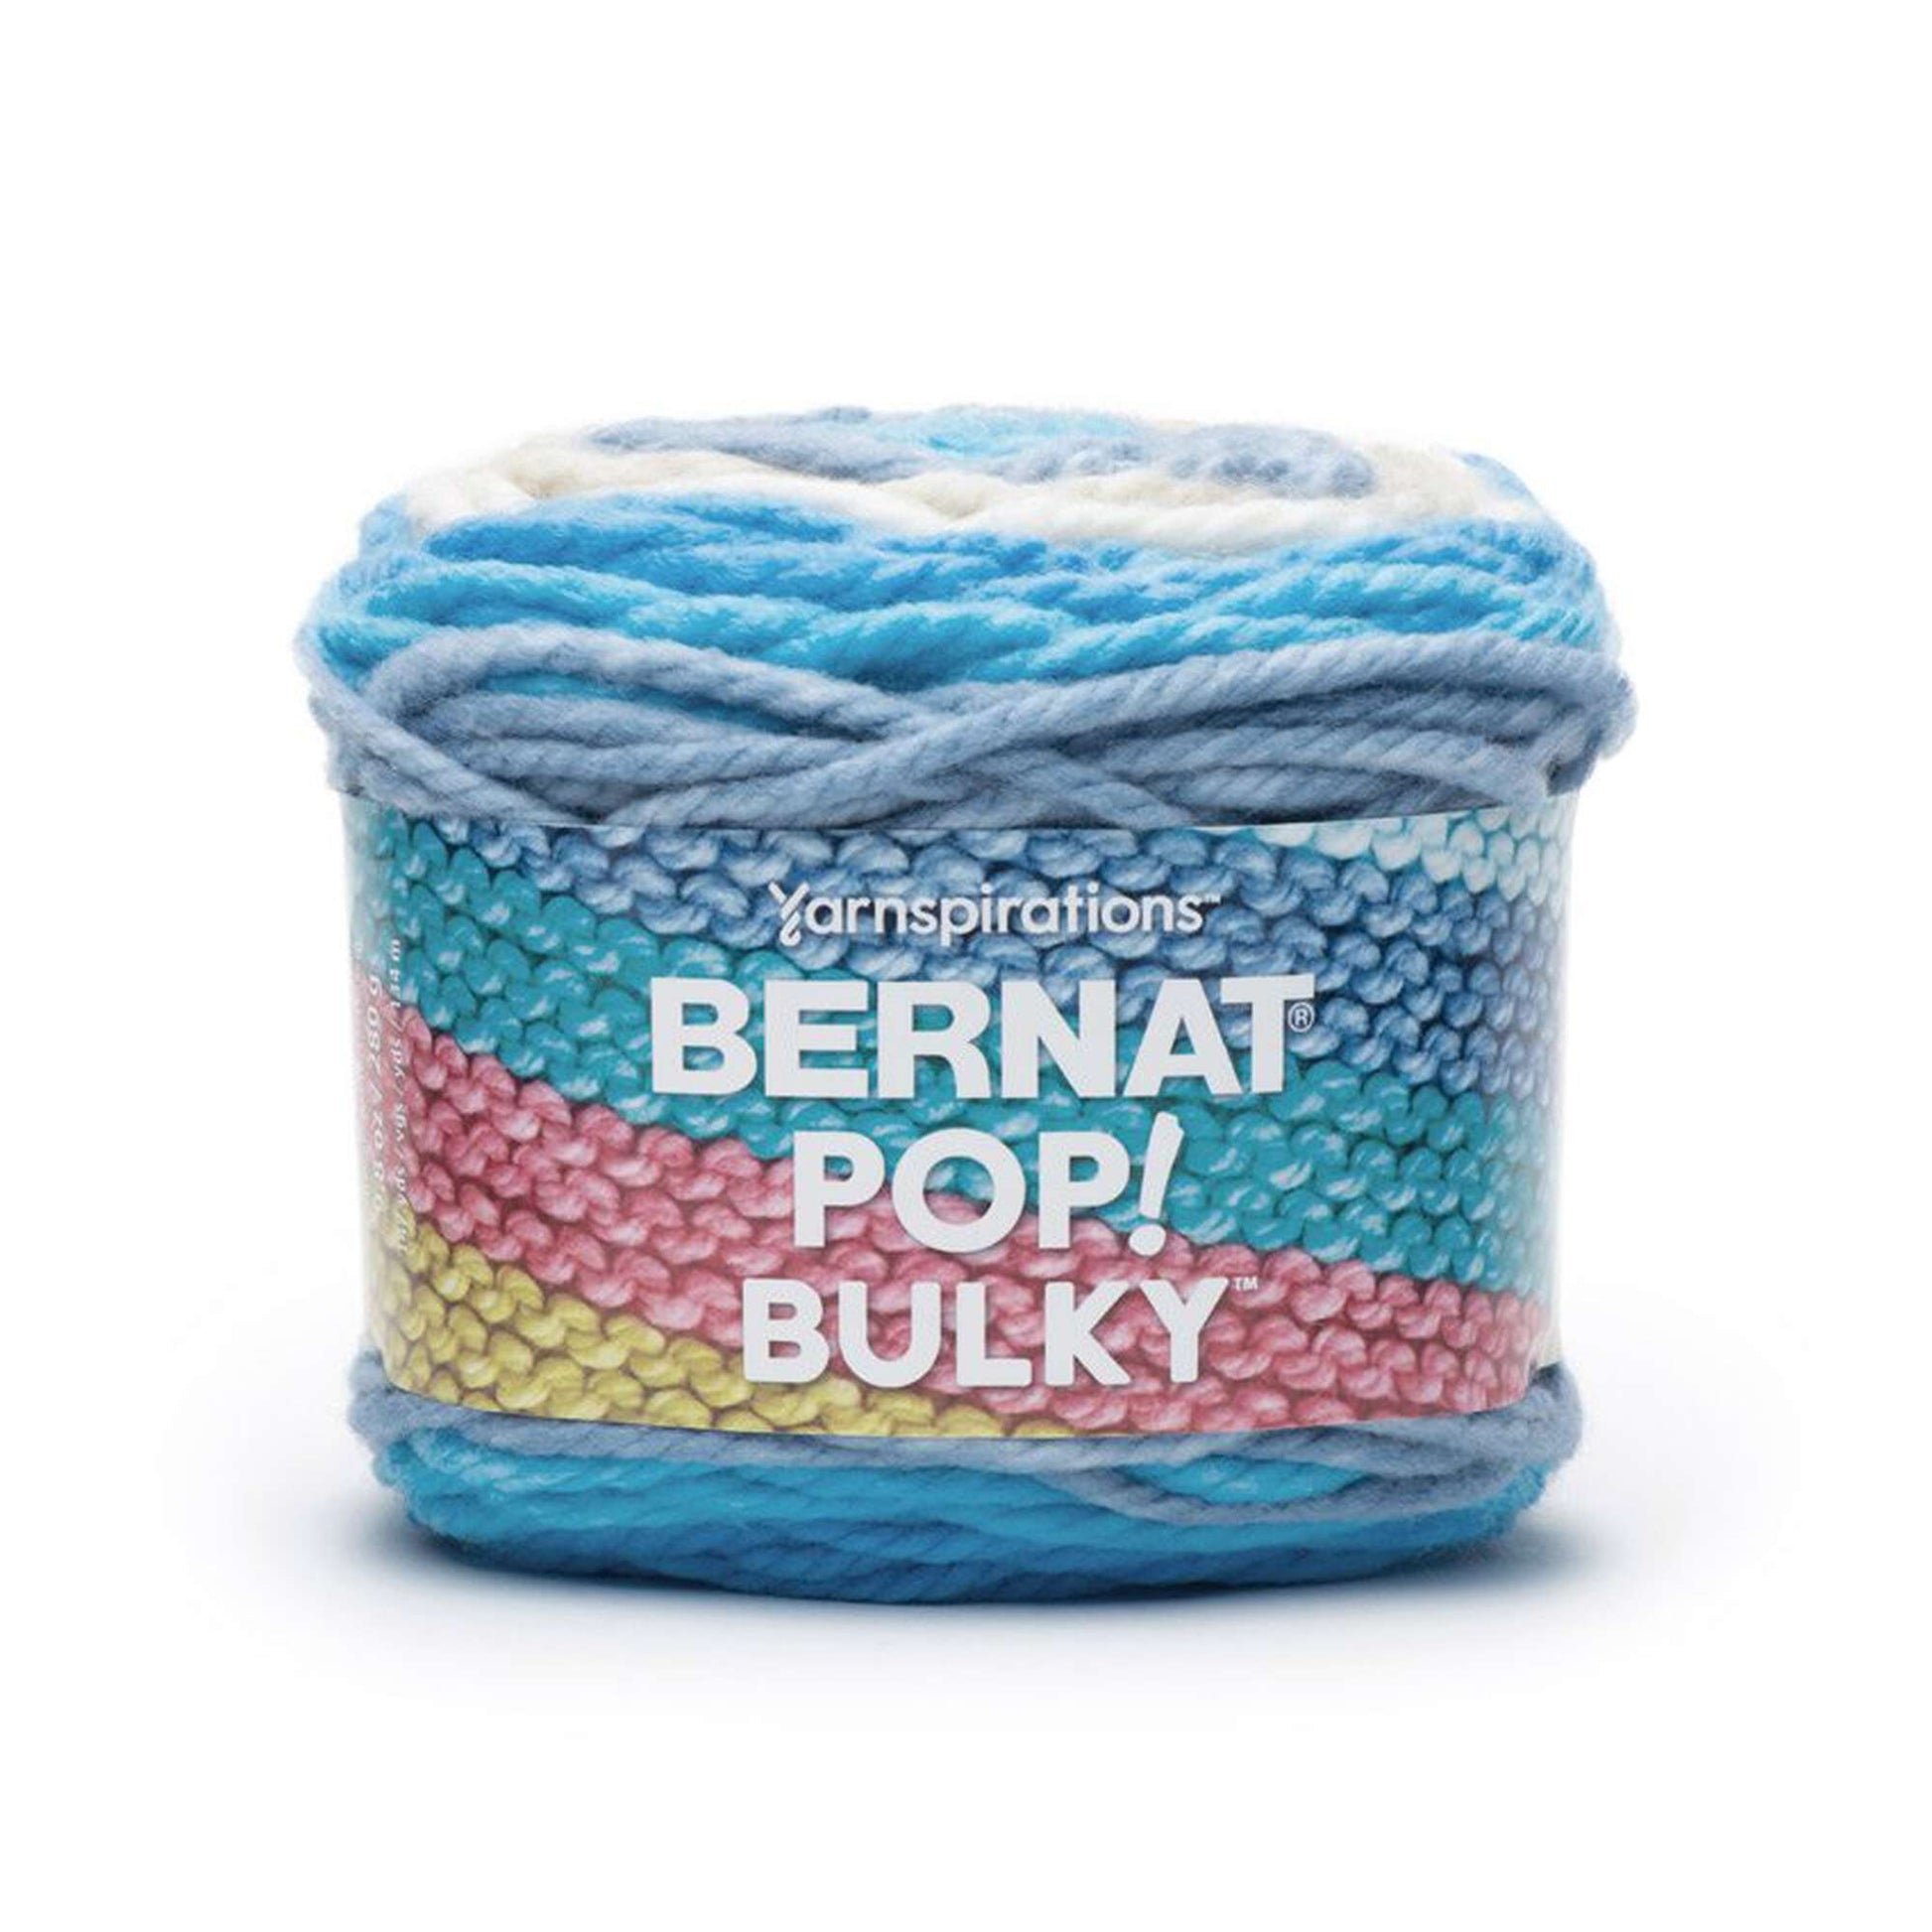 Bernat Pop! Bulky Yarn - Discontinued Shades Bluebird of Happiness